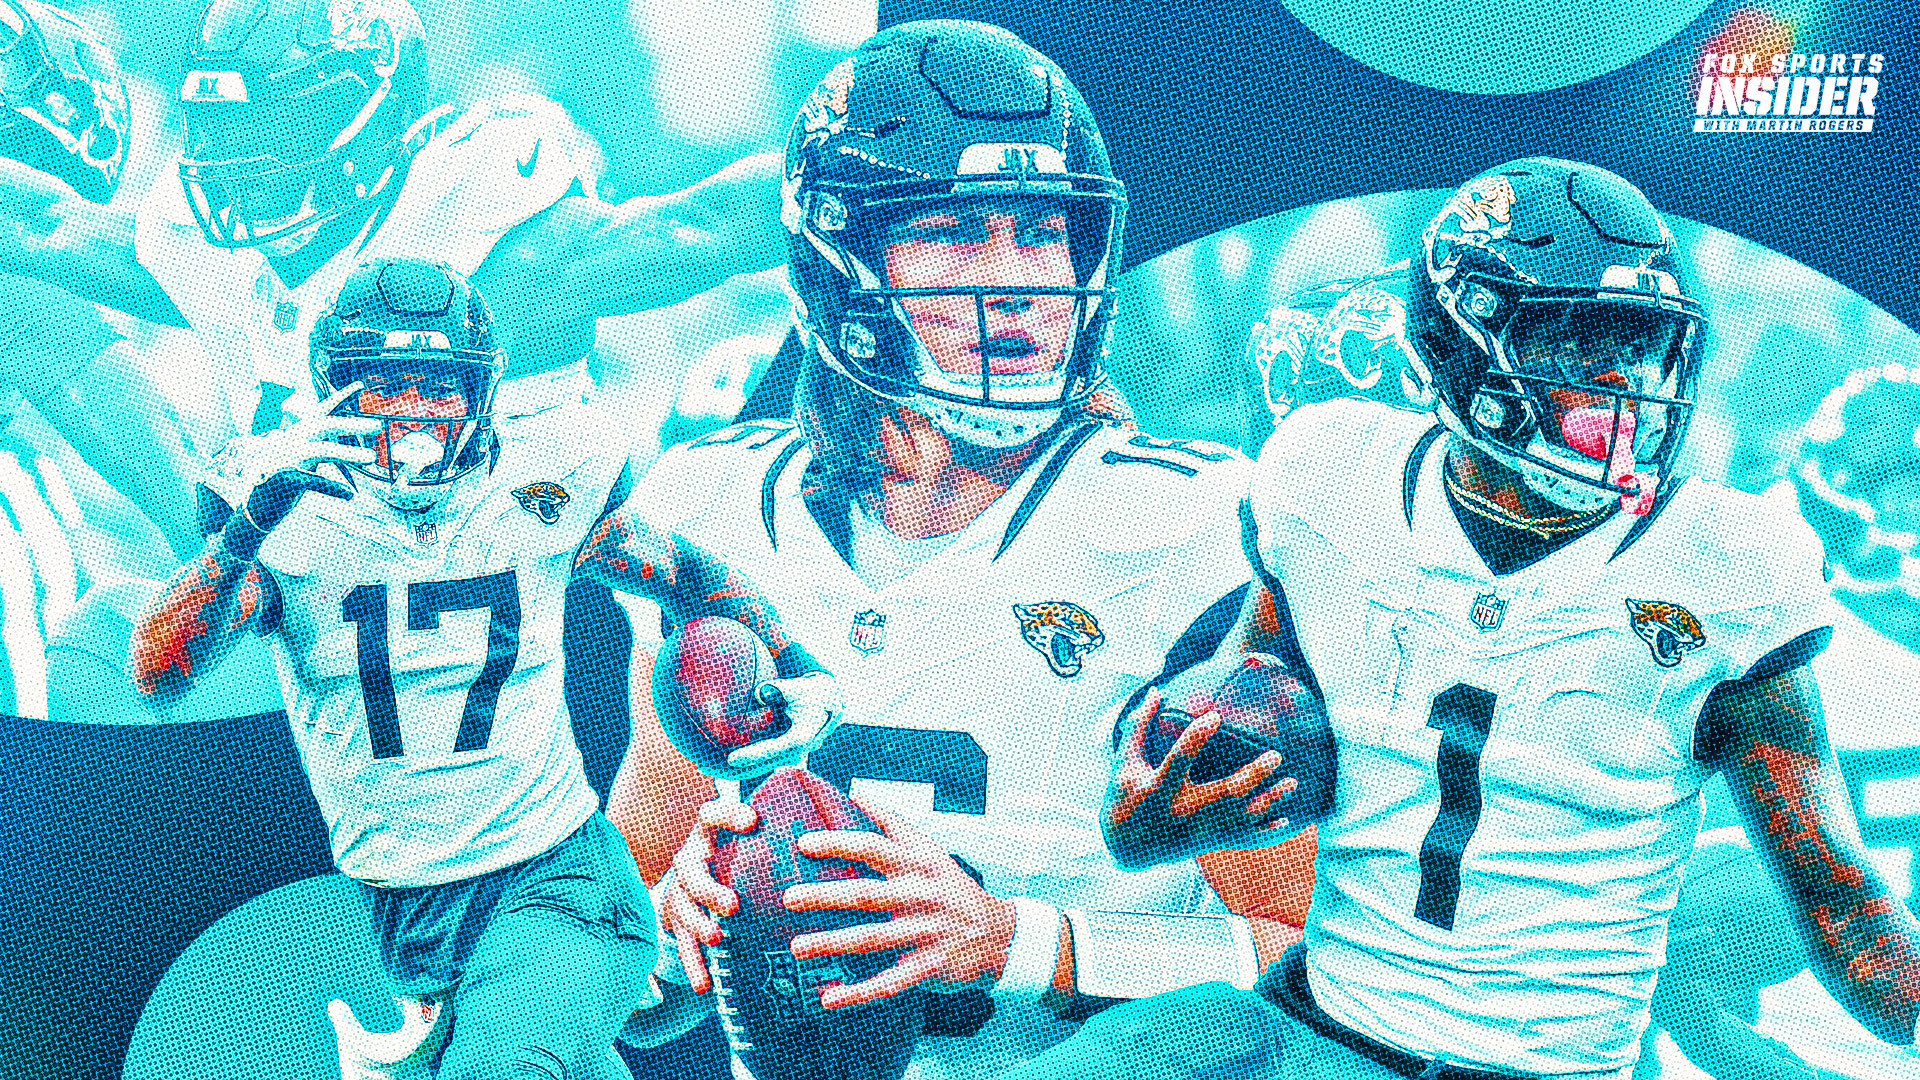 The Jaguars deserve consideration among NFL's best teams